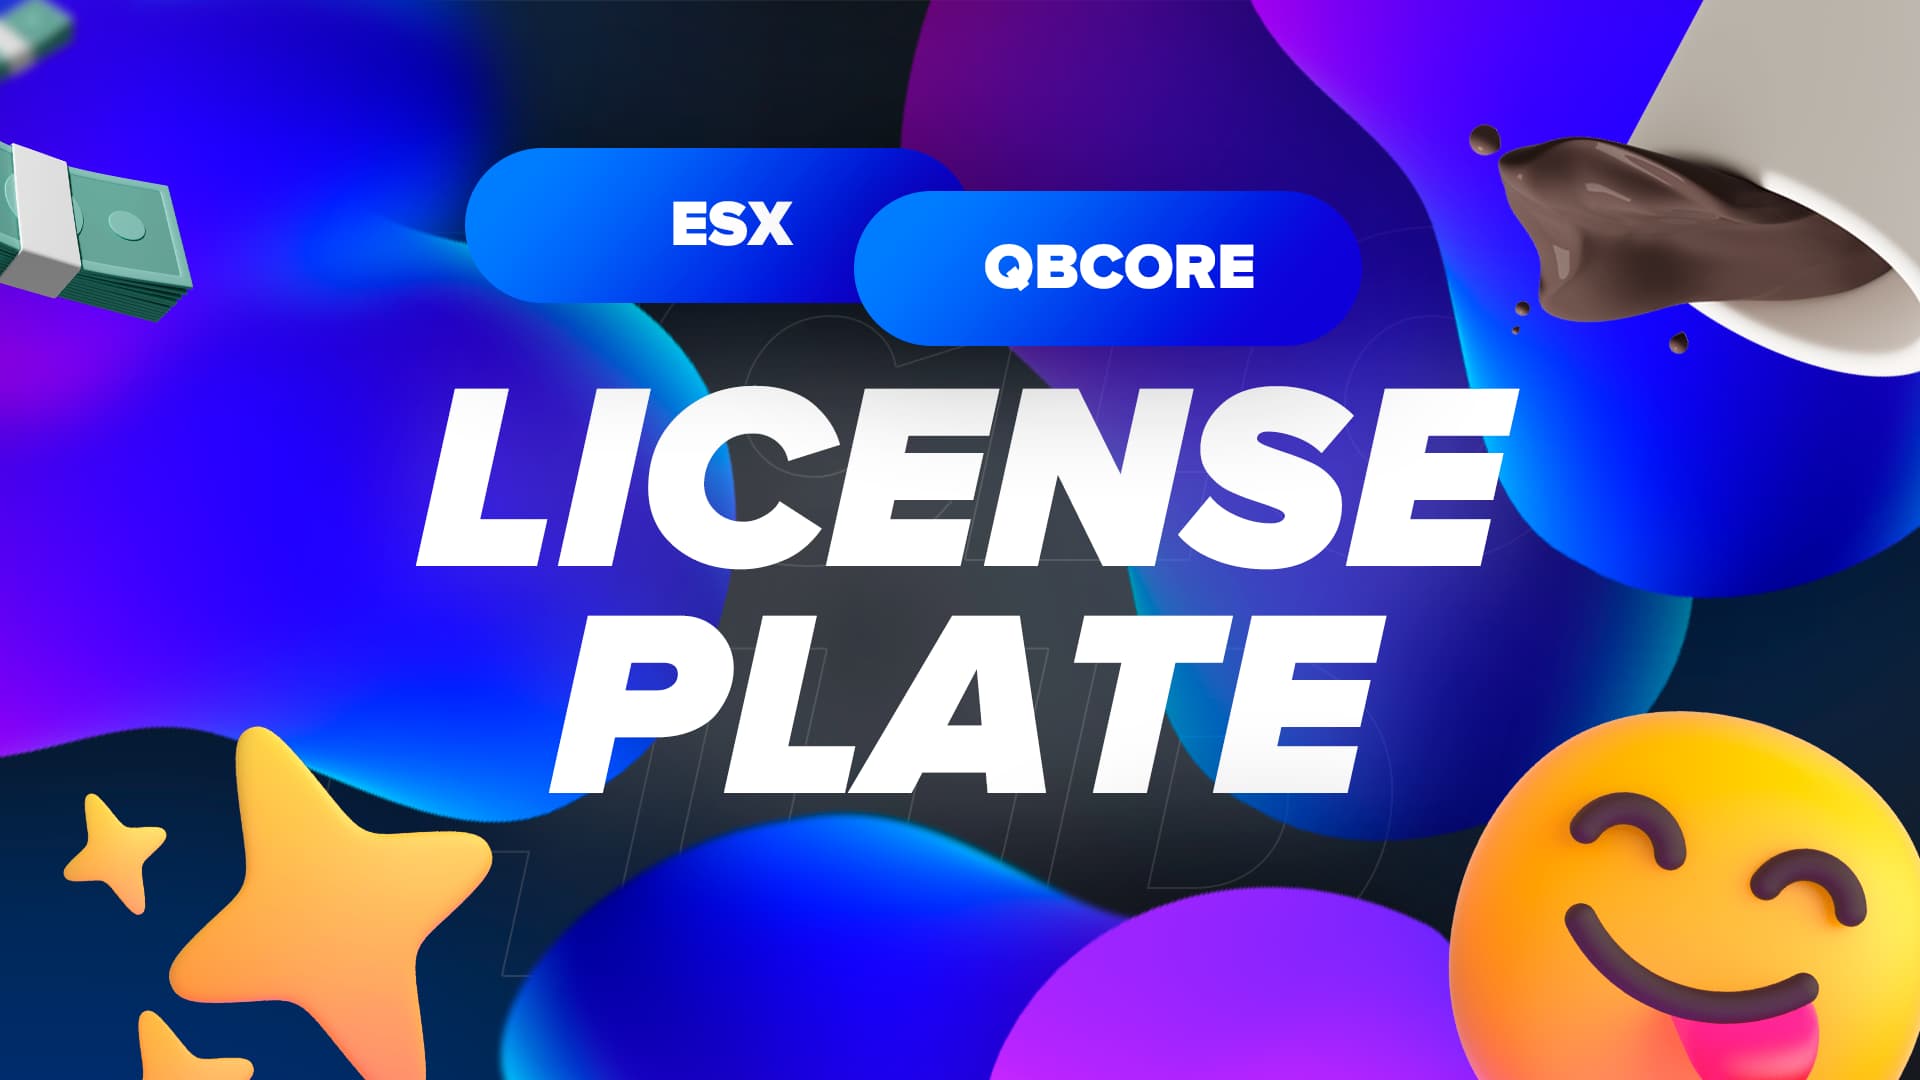 paid-qb-esx-fc-license-plate-releases-cfx-re-community